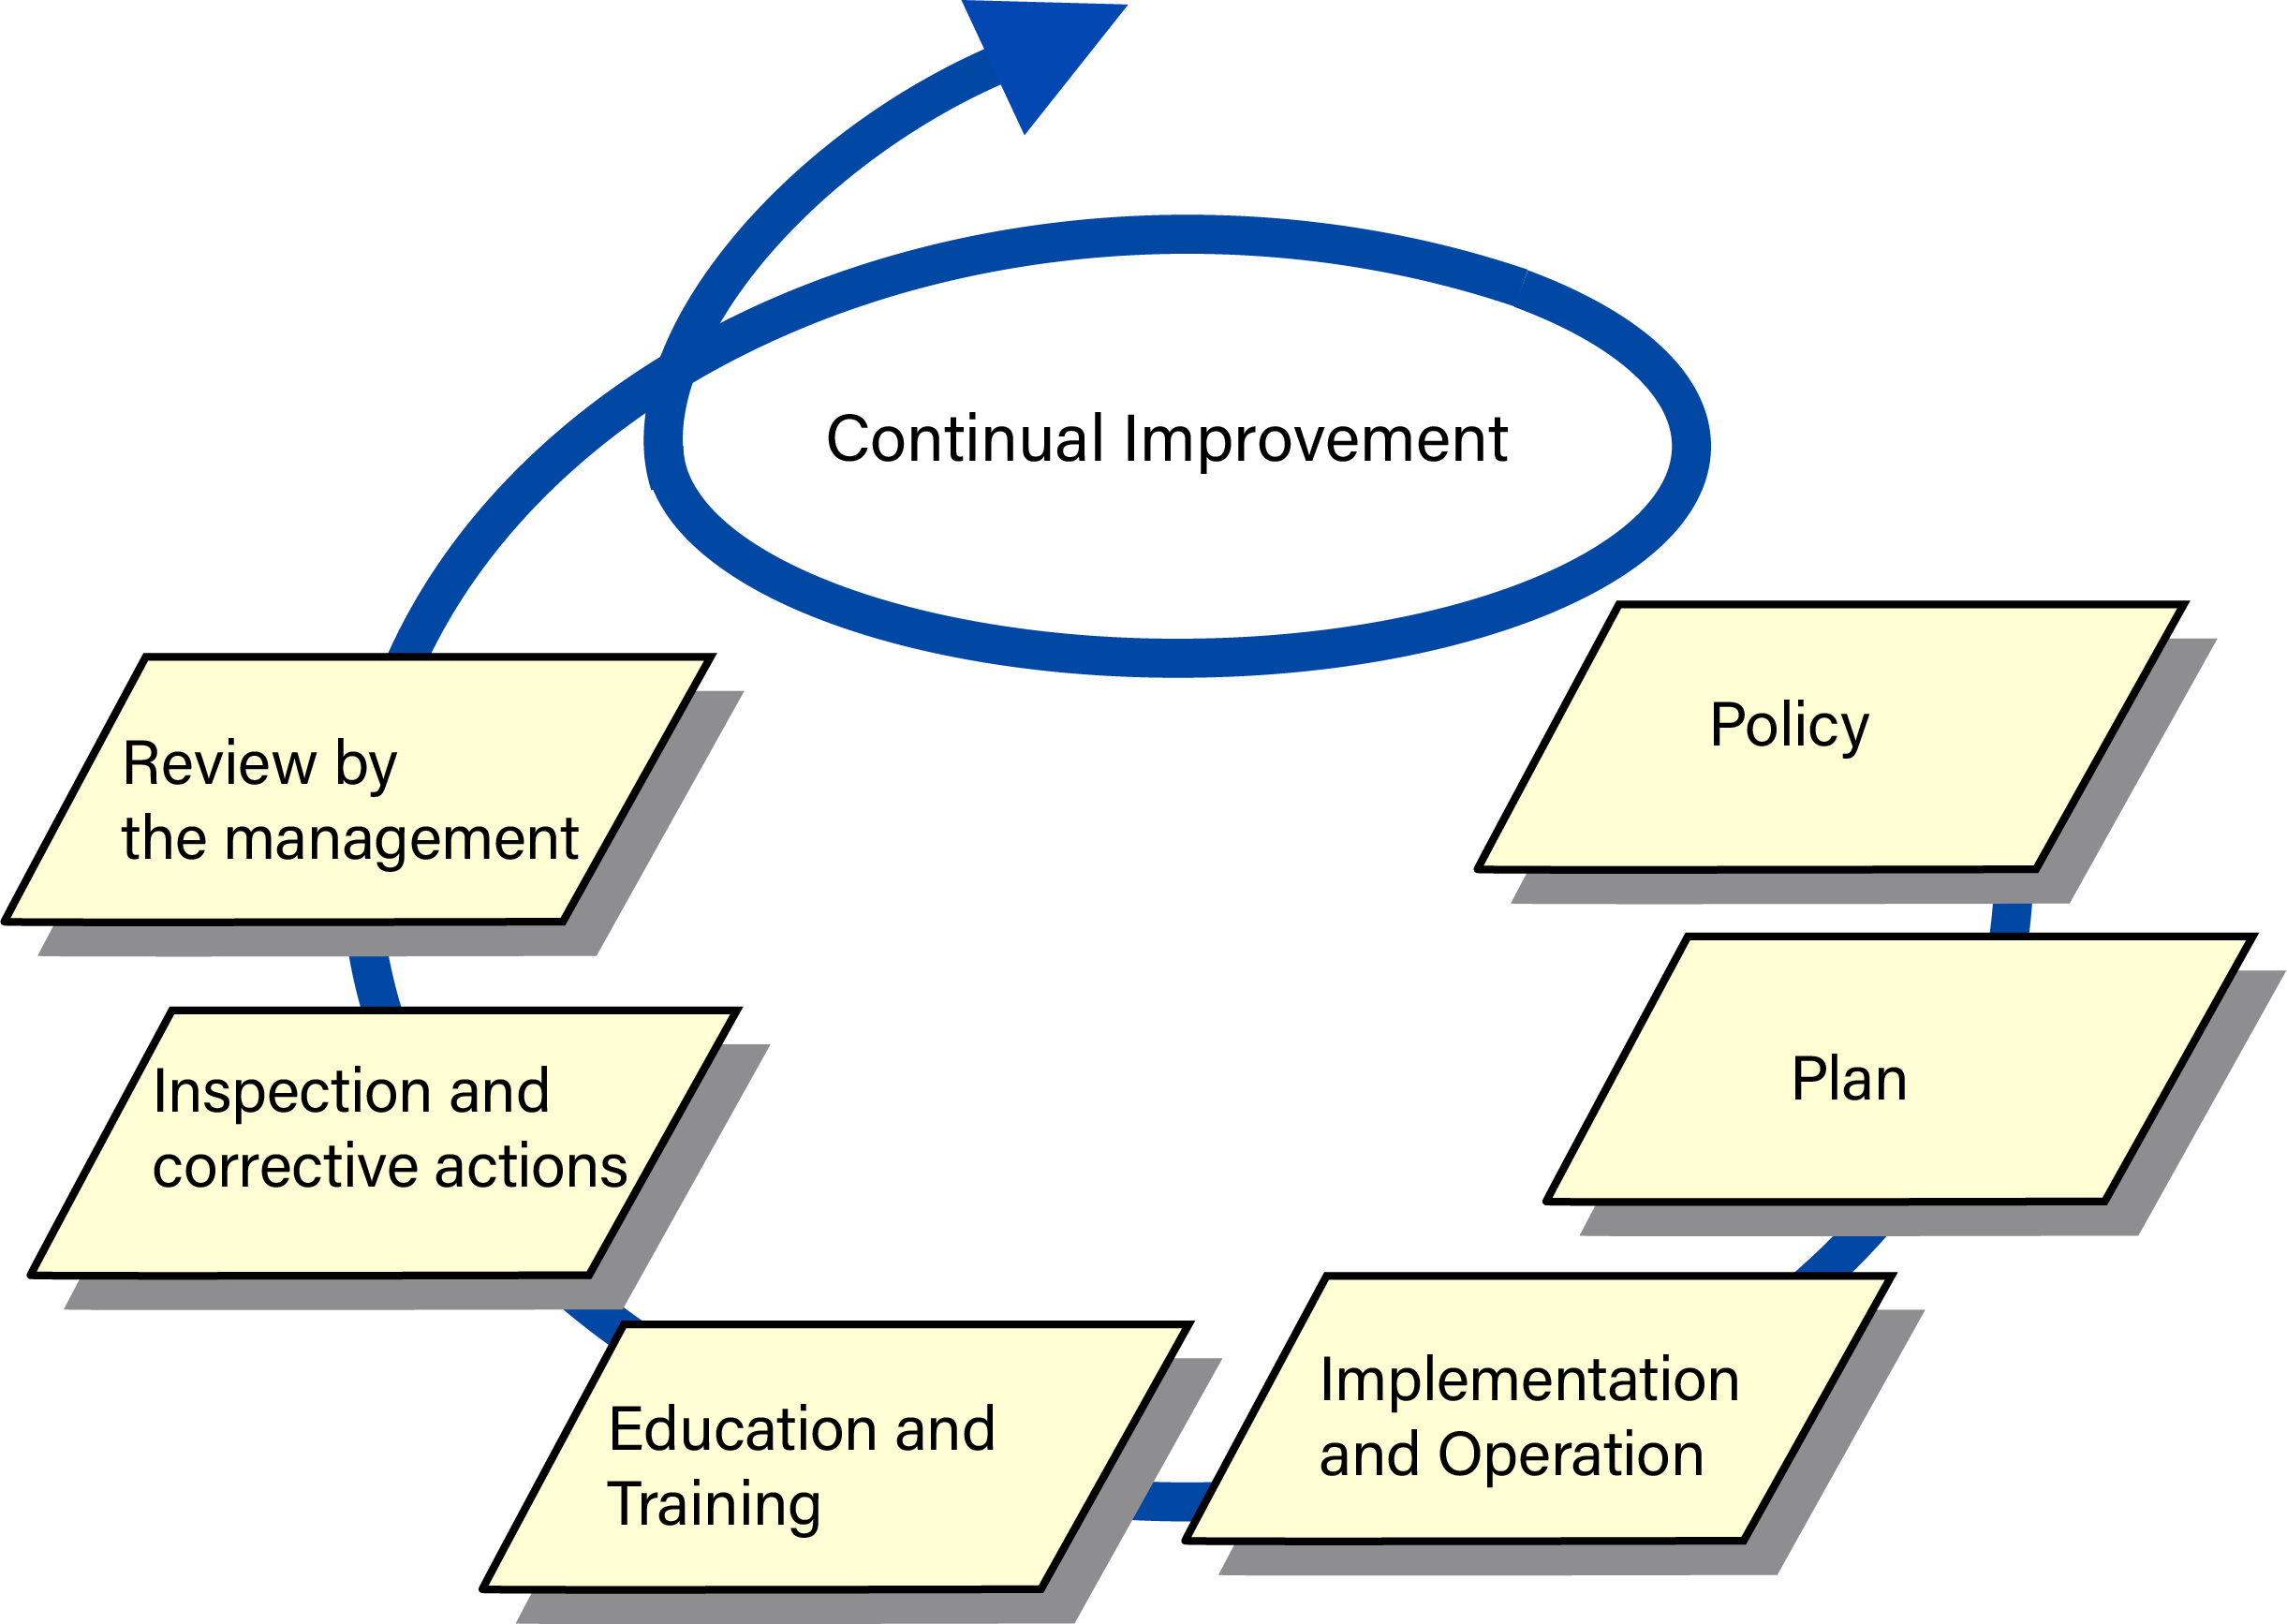 Figure 3.2.1.3. Continuous improvement of business continuity management